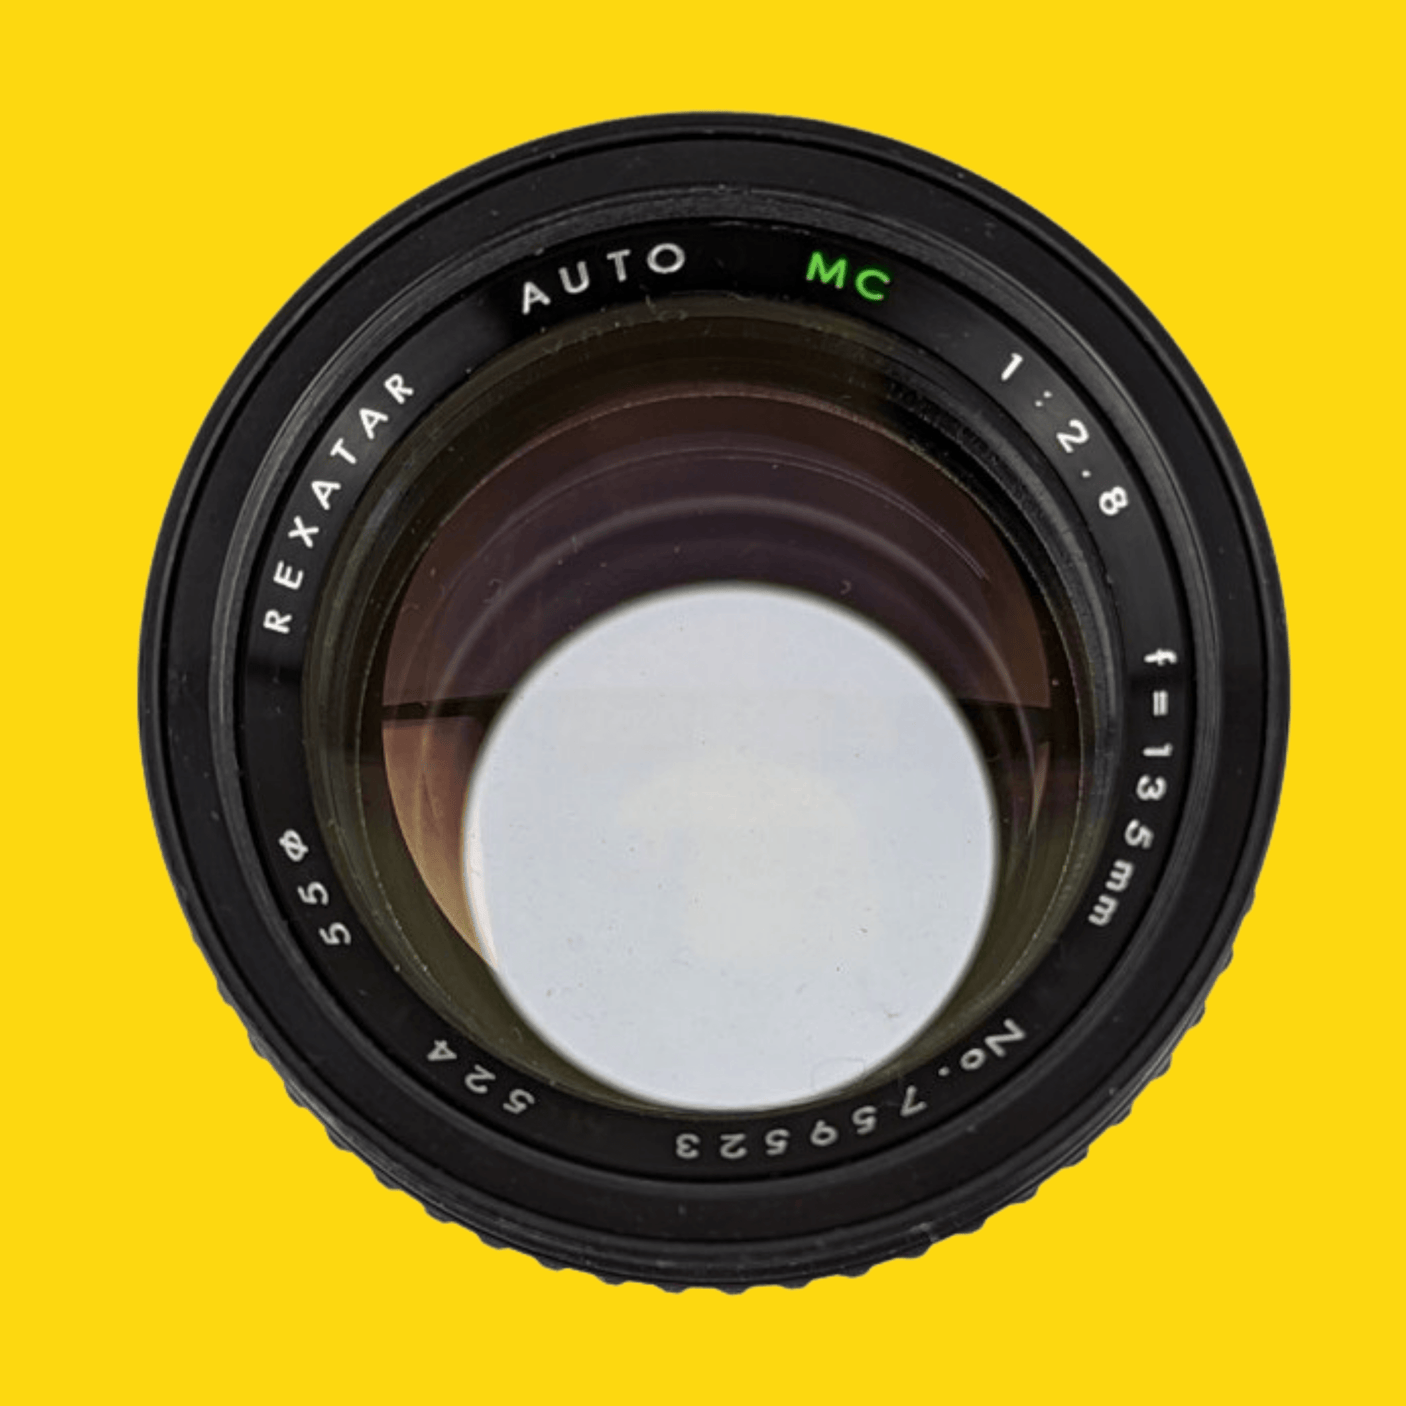 Rexatar Auto MC 135mm f/2.8 Camera Lens